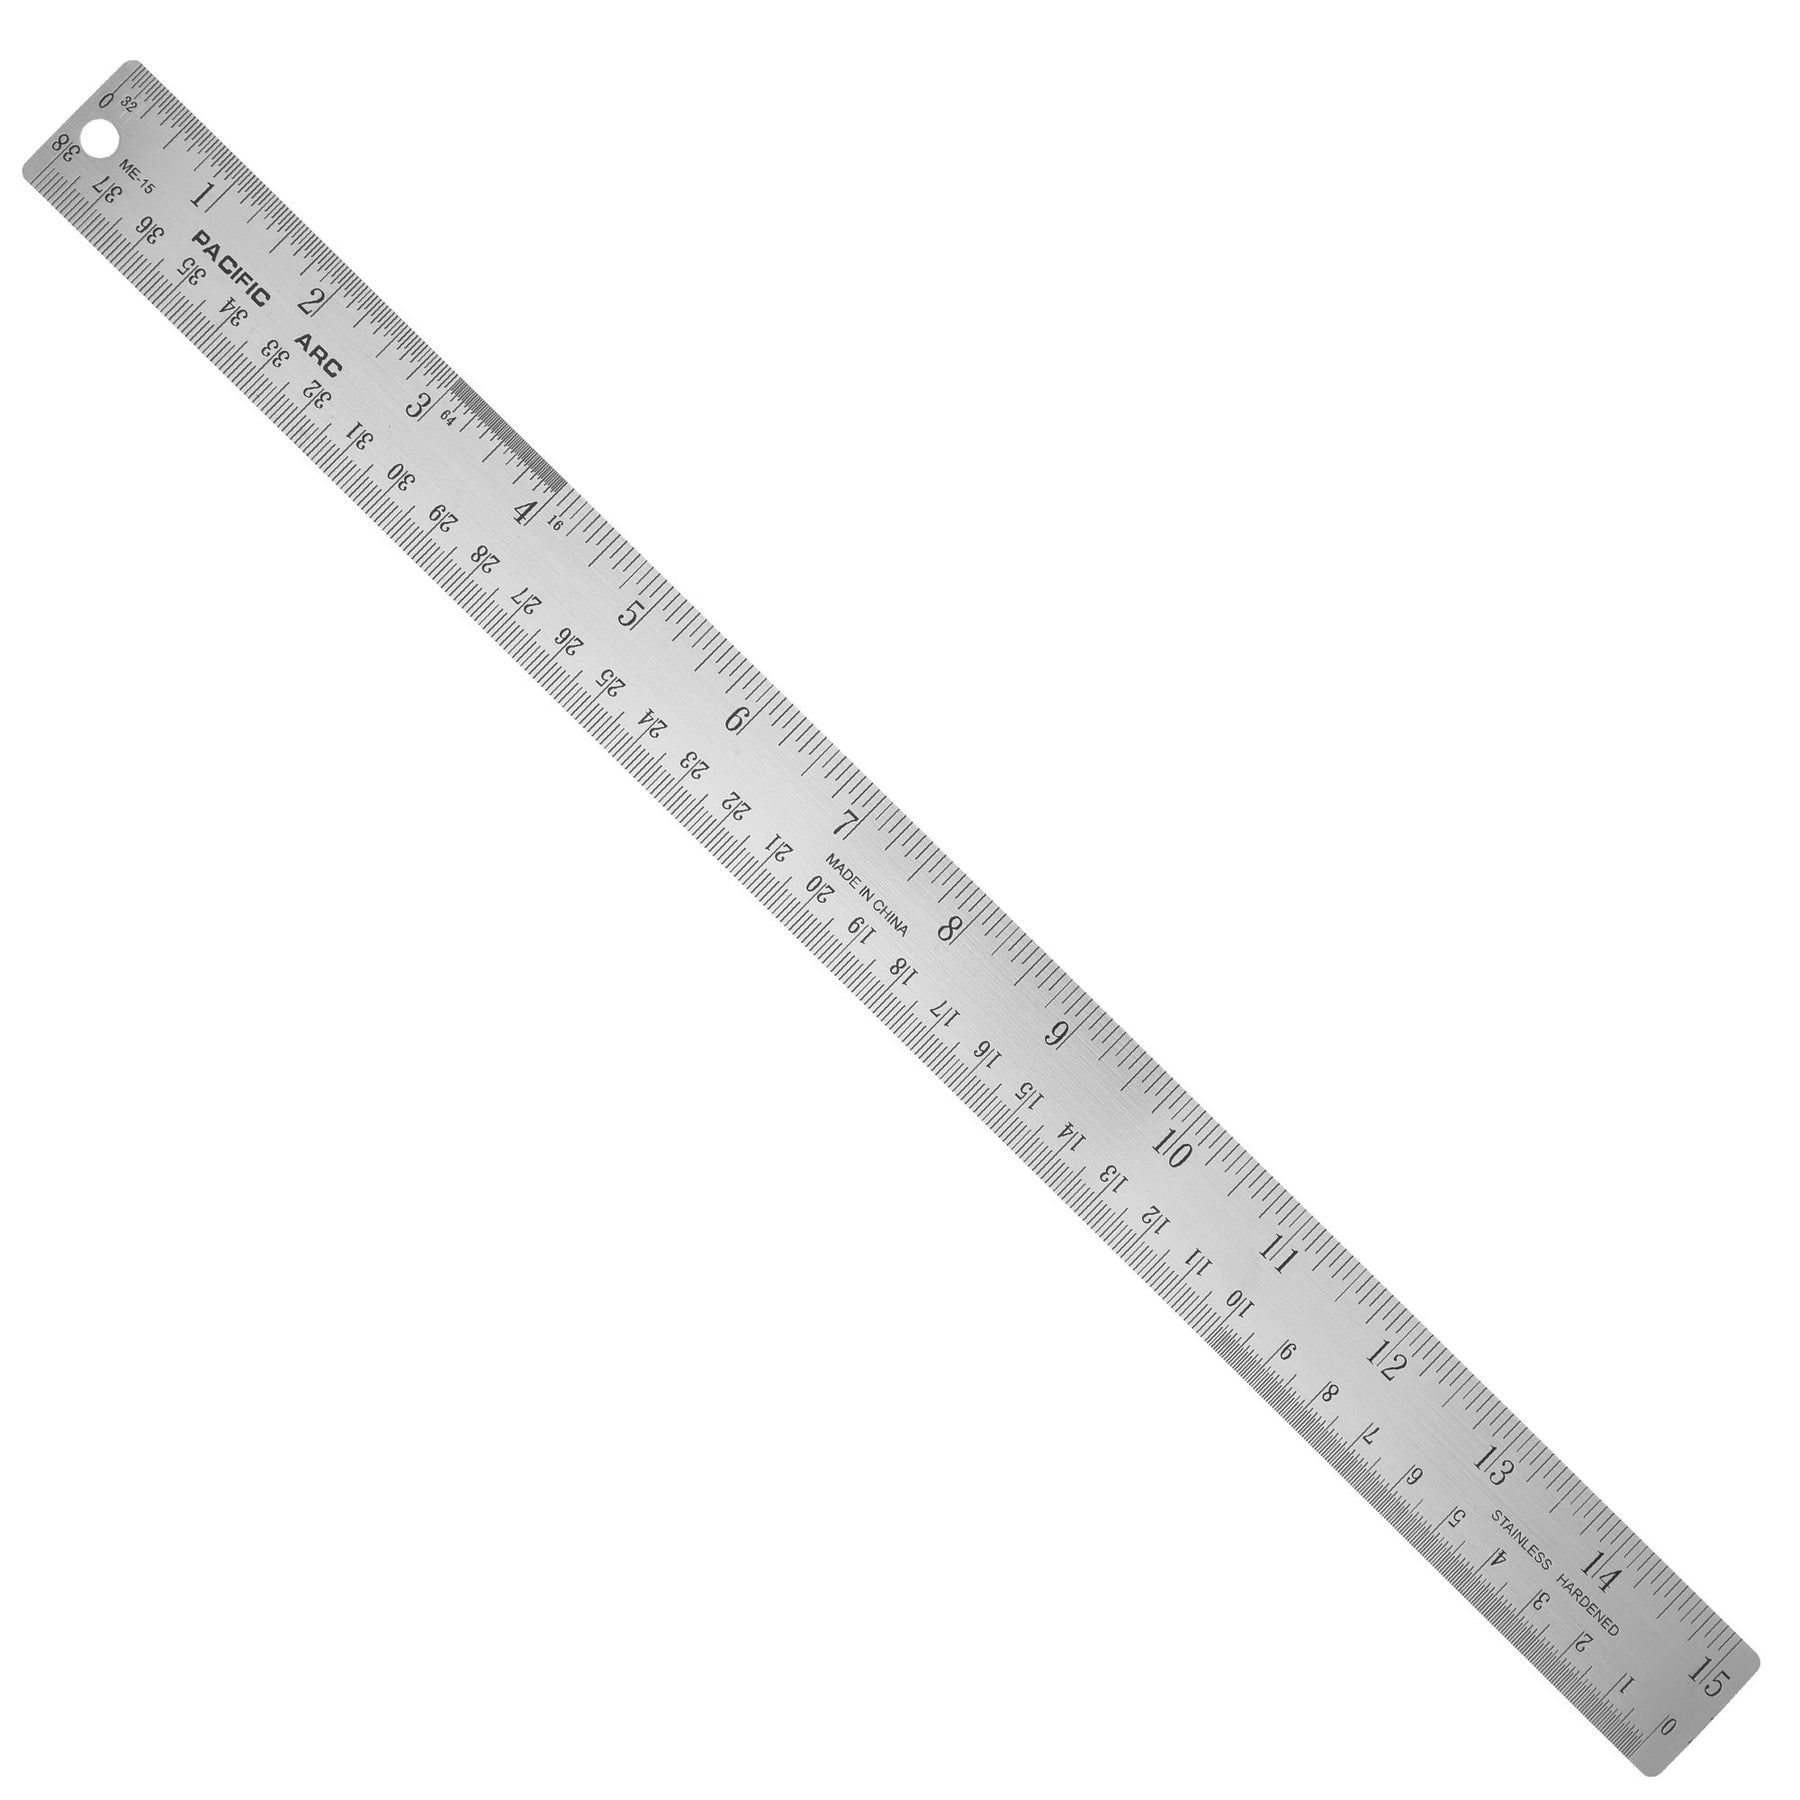 15cm / 6inch steel ruler - Matcon